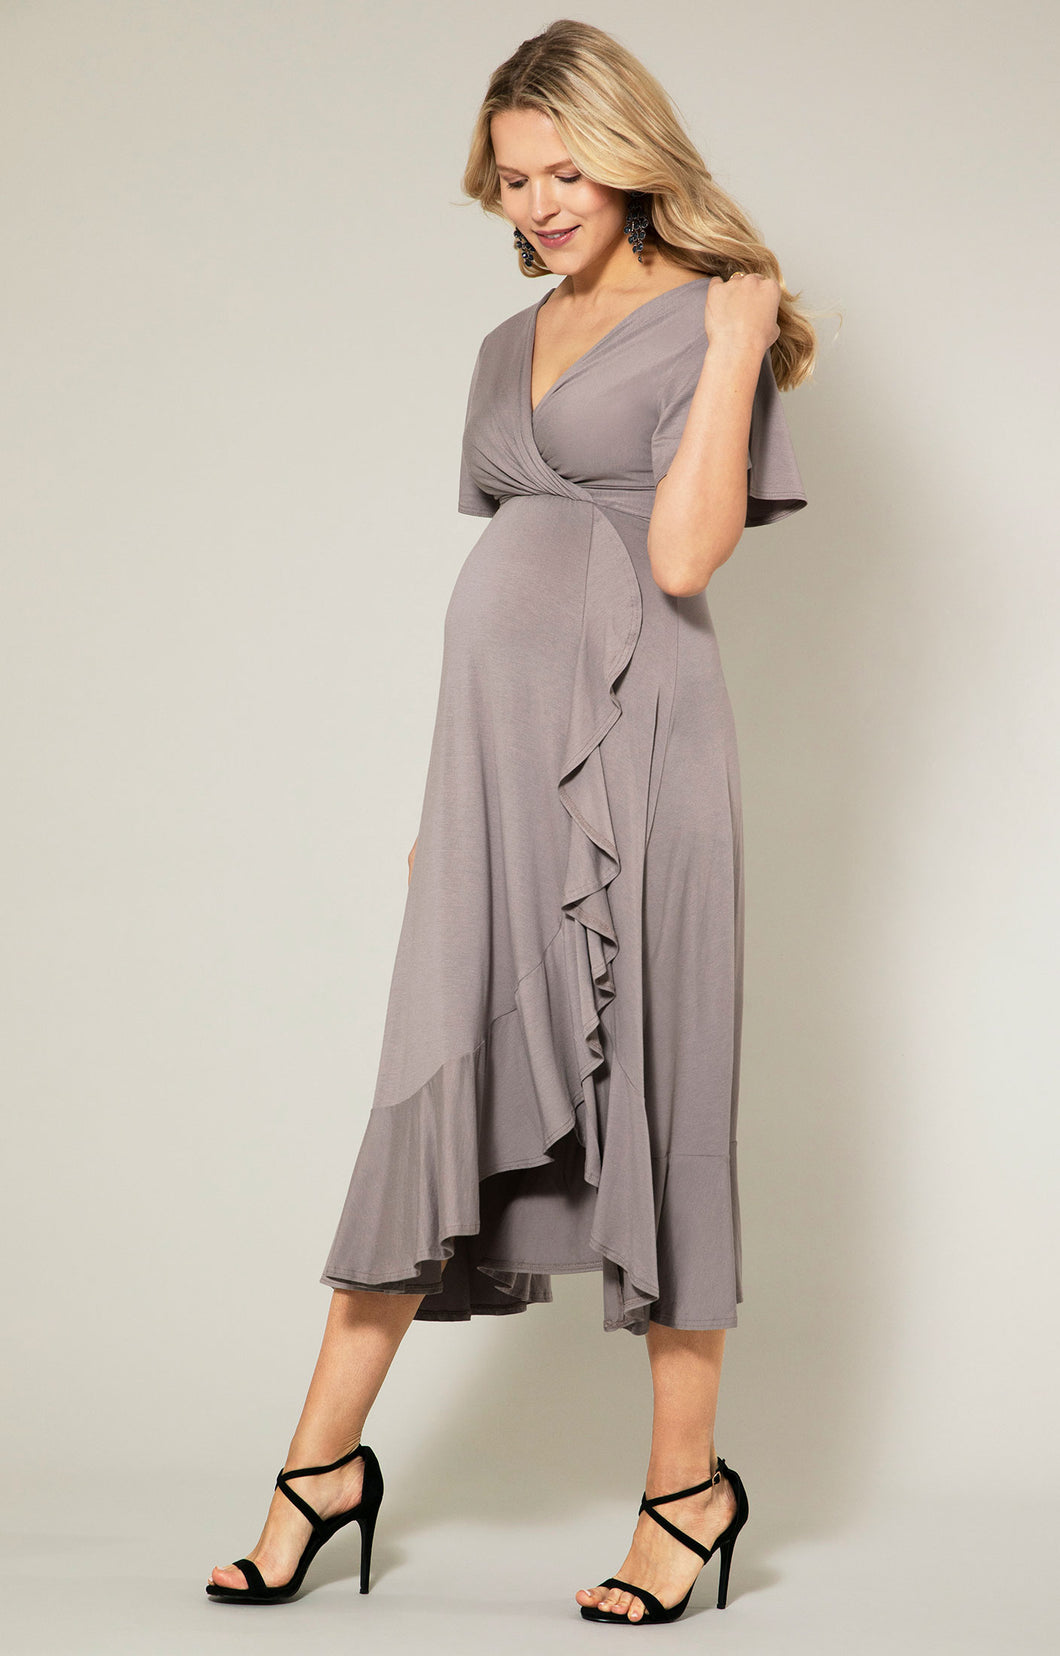 Tiffany Rose - Waterfall midi dress - taupe grey 44-46  | MILD zwangerschapsboetiek - zwangerschapskleding bij Mechelen